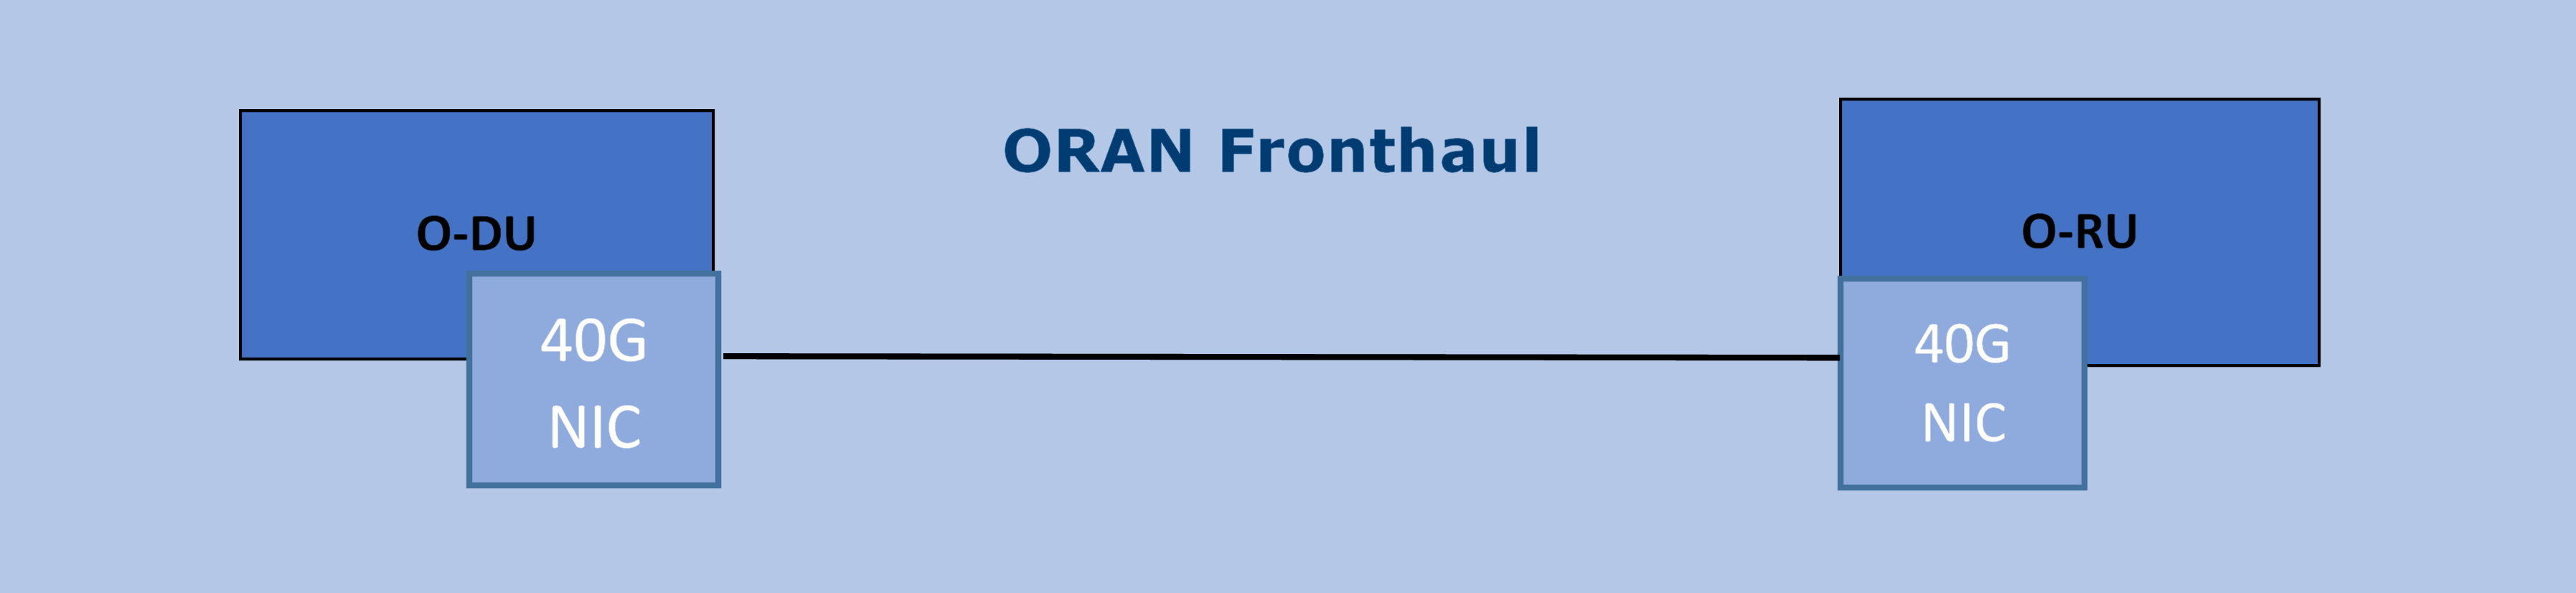 docs/images/ORAN-Fronthaul-Process.jpg